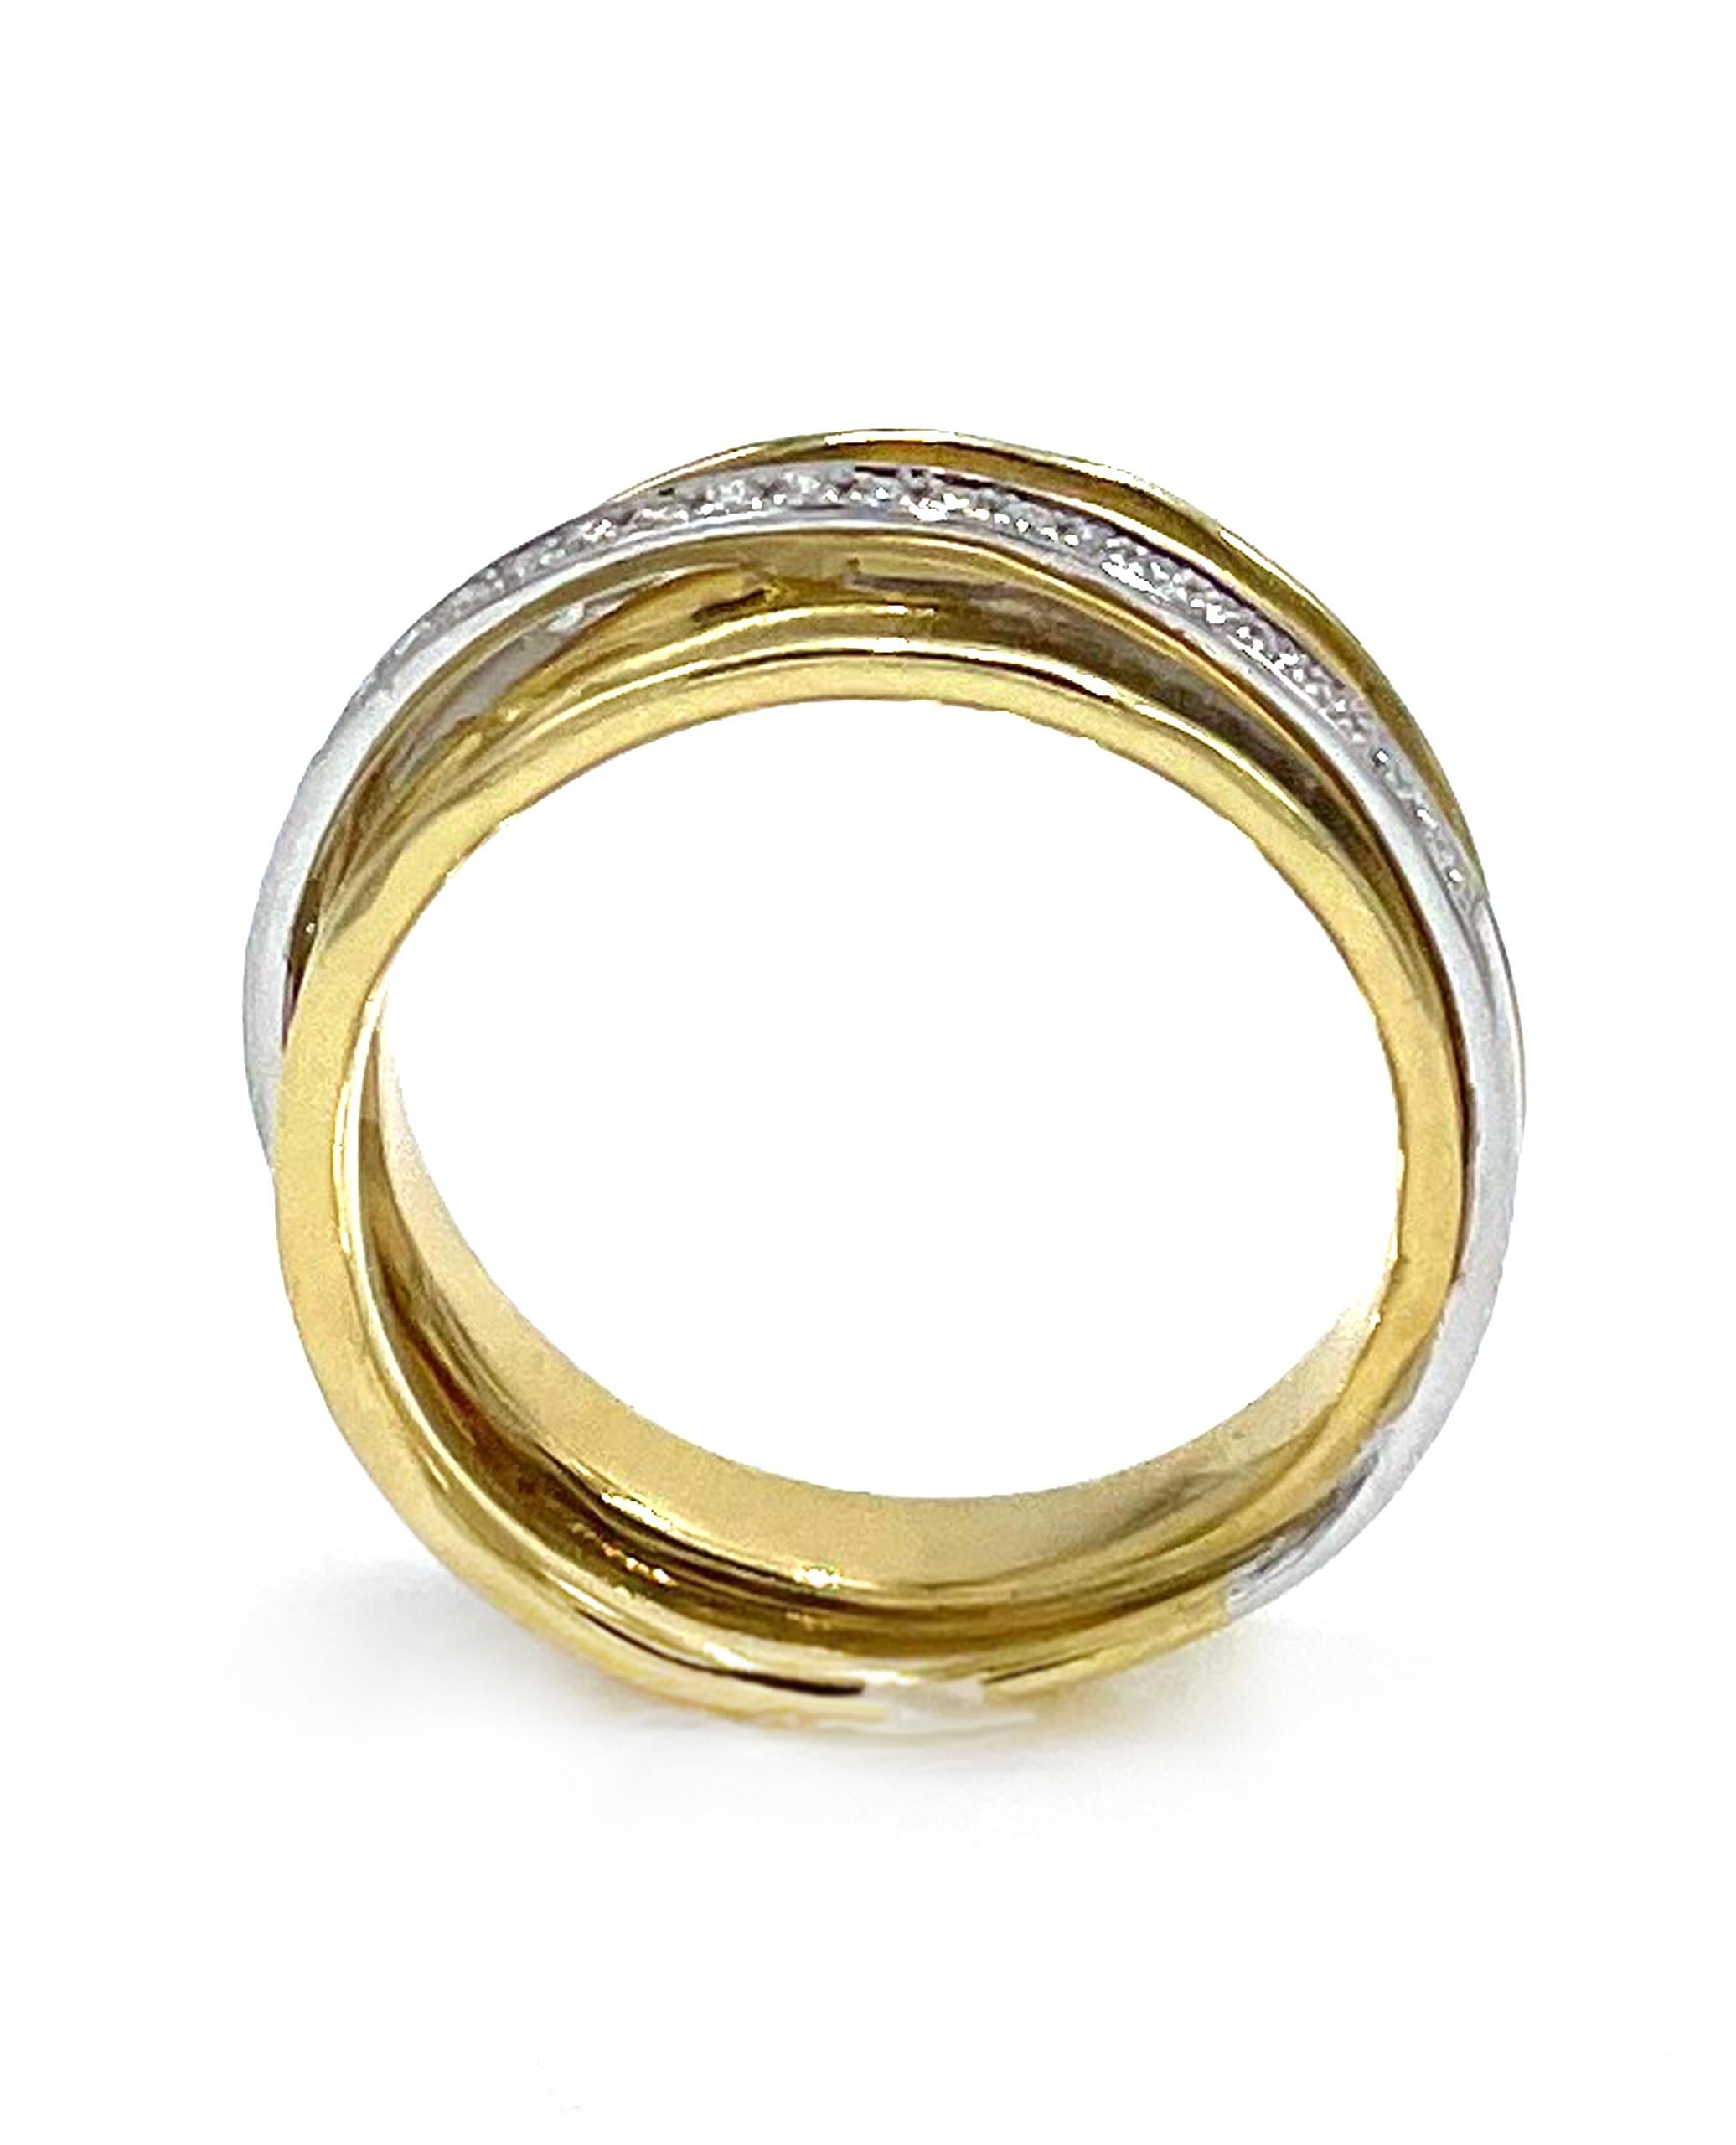 Round Cut Simon G. LR2576 Diamond Woven Ring - 18K Yellow Gold For Sale